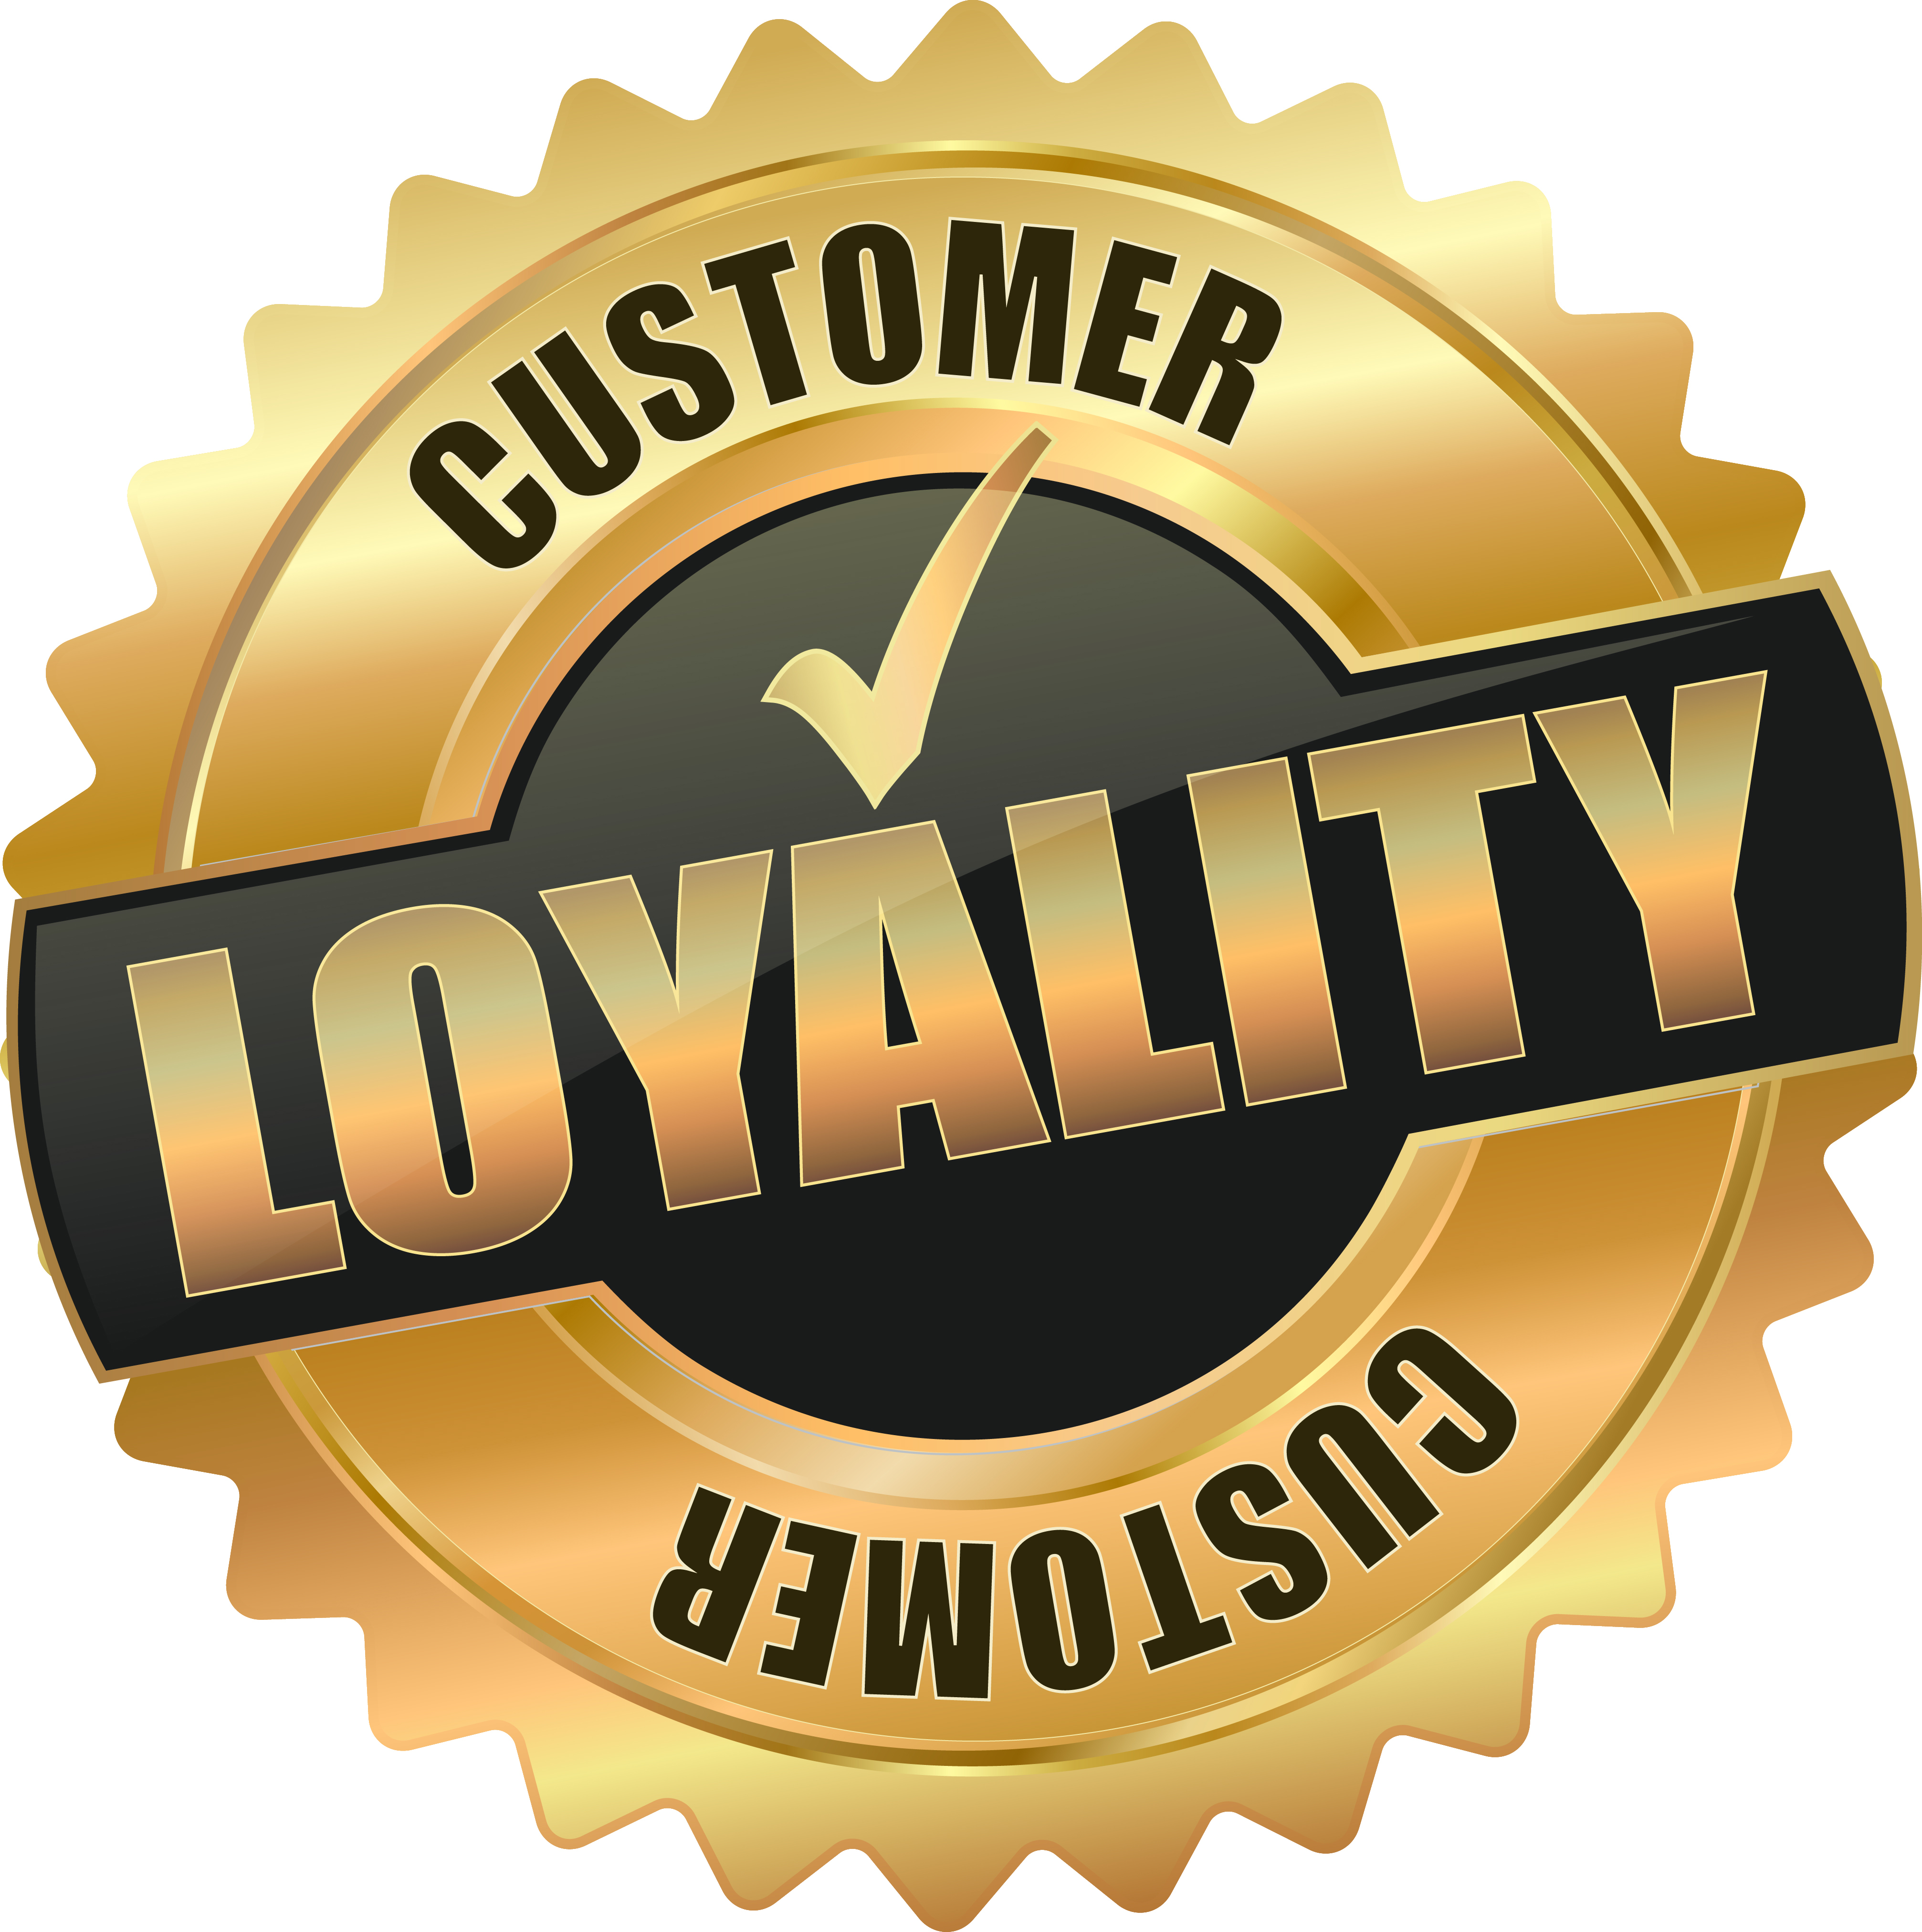 Chrysler customer loyalty discount